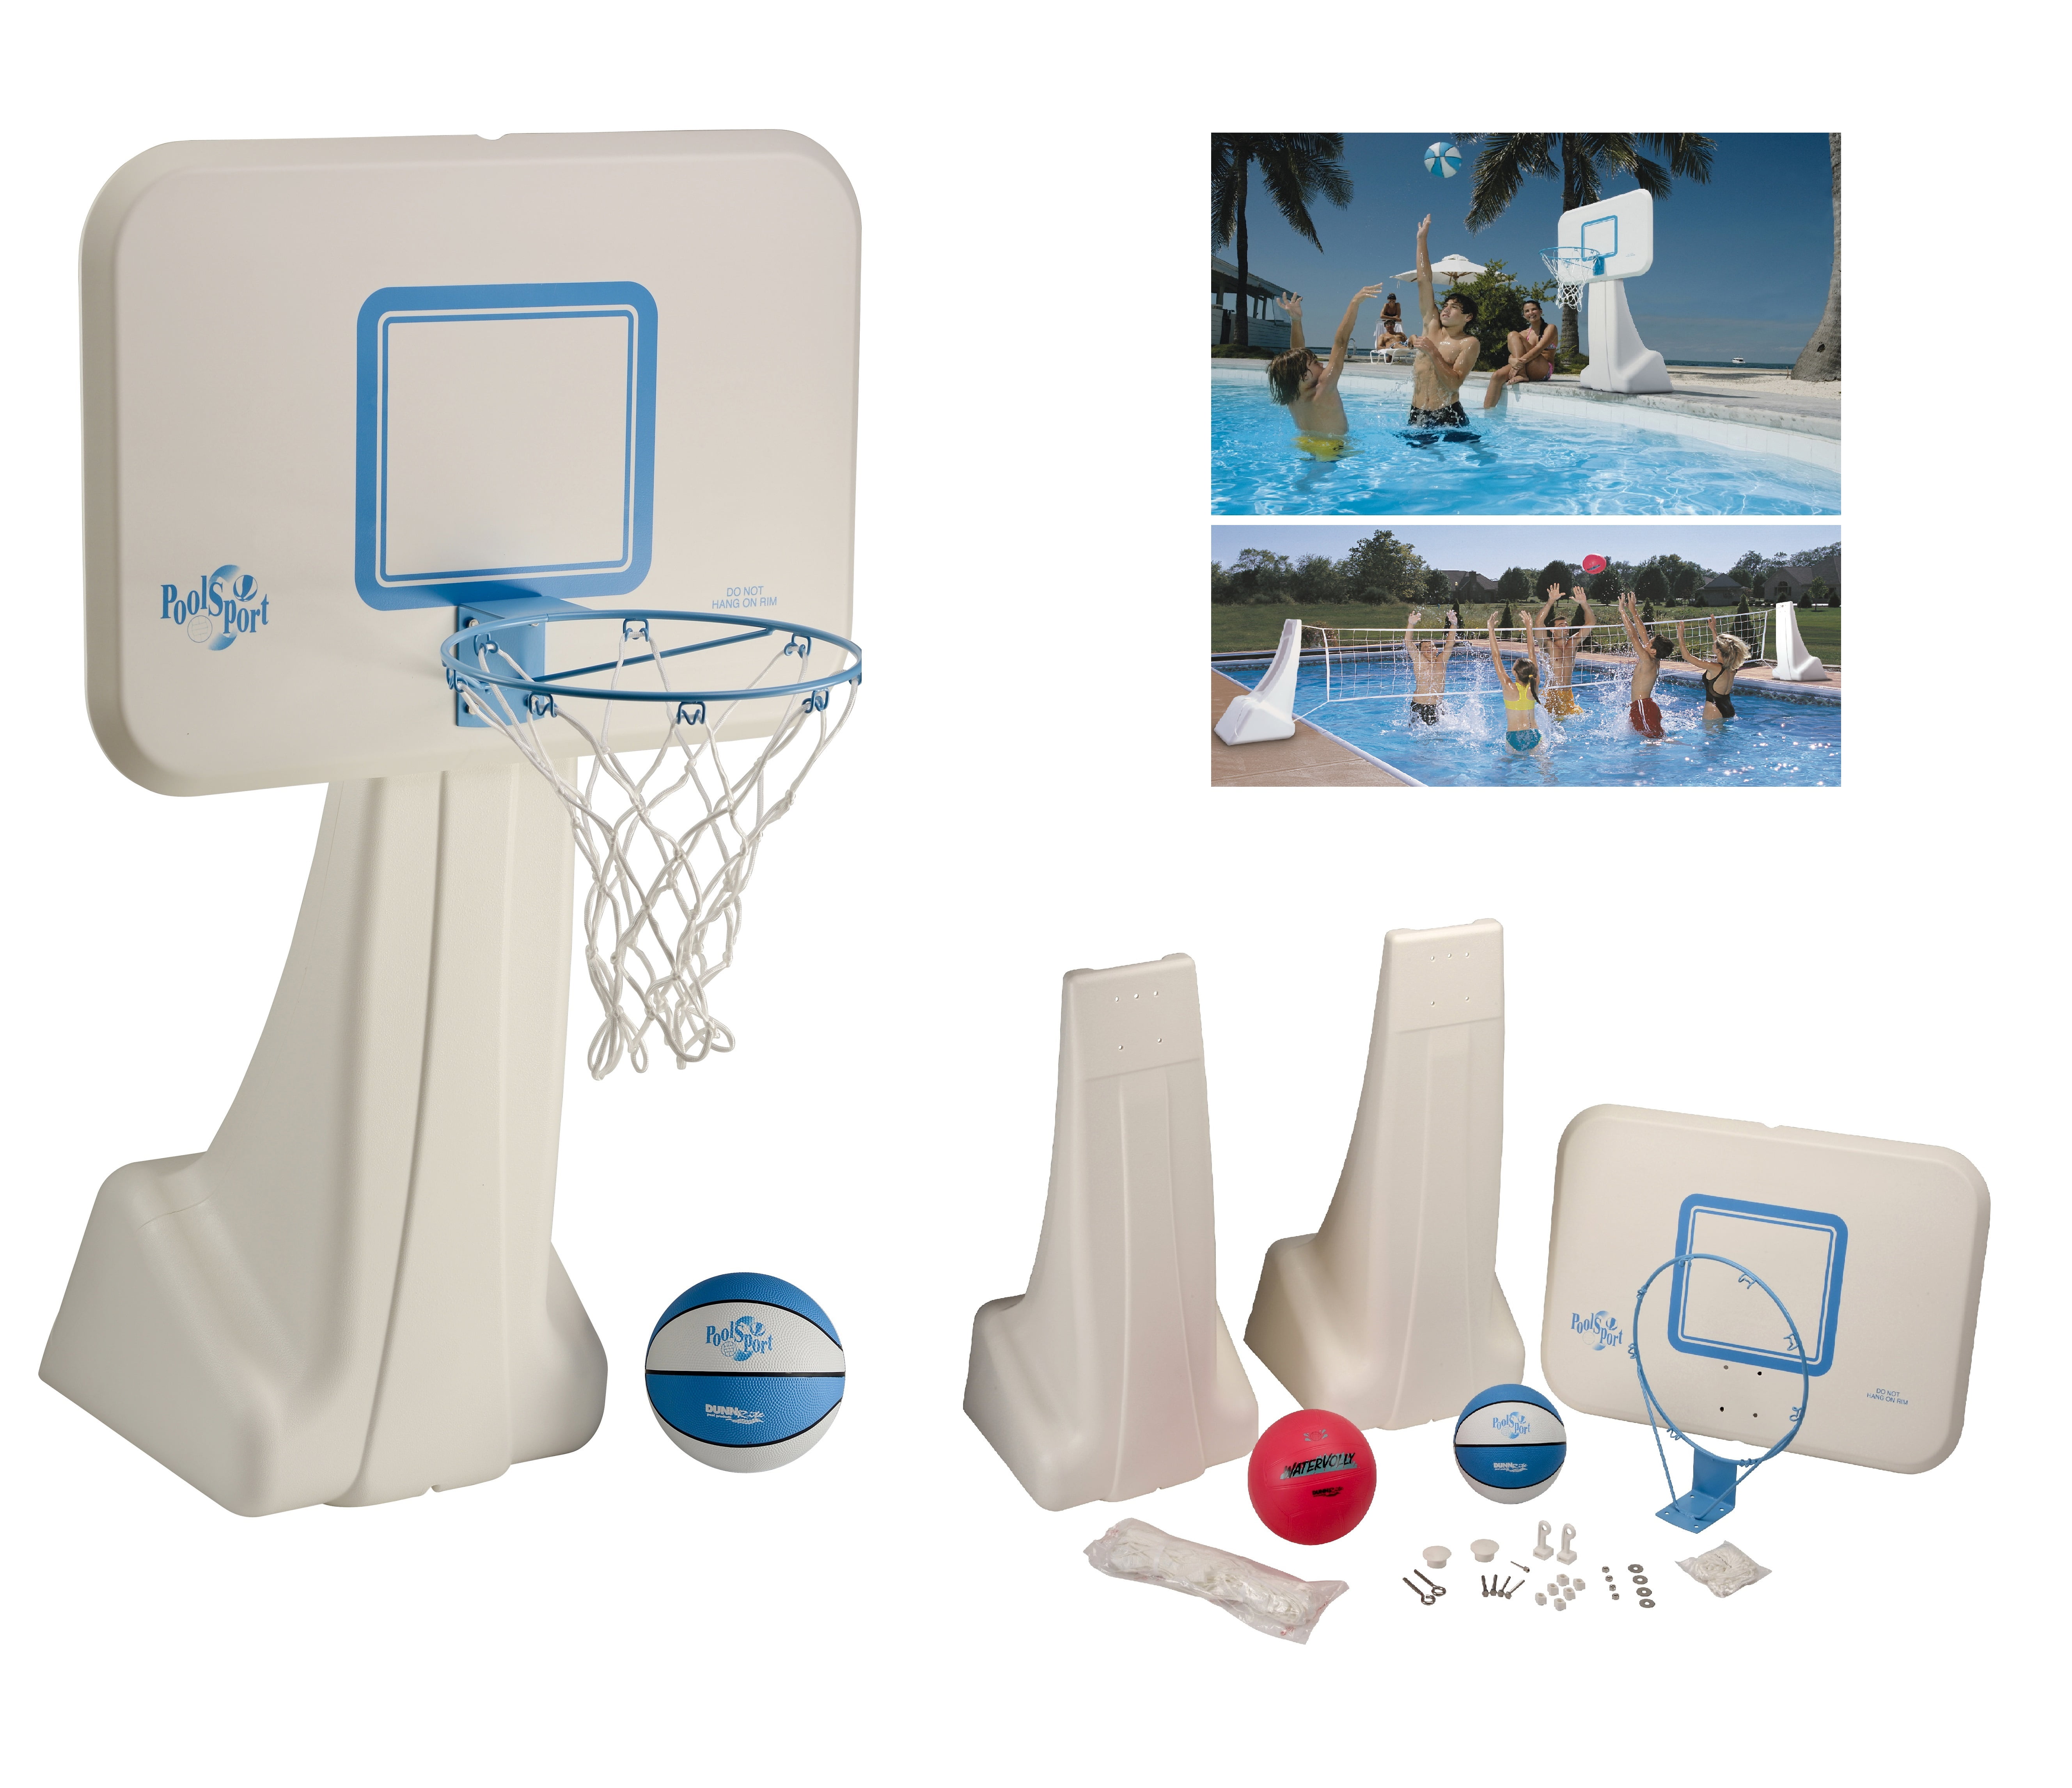 Dunn-rite PoolSport Portable Pool Basketball Hoop B950 for sale online 